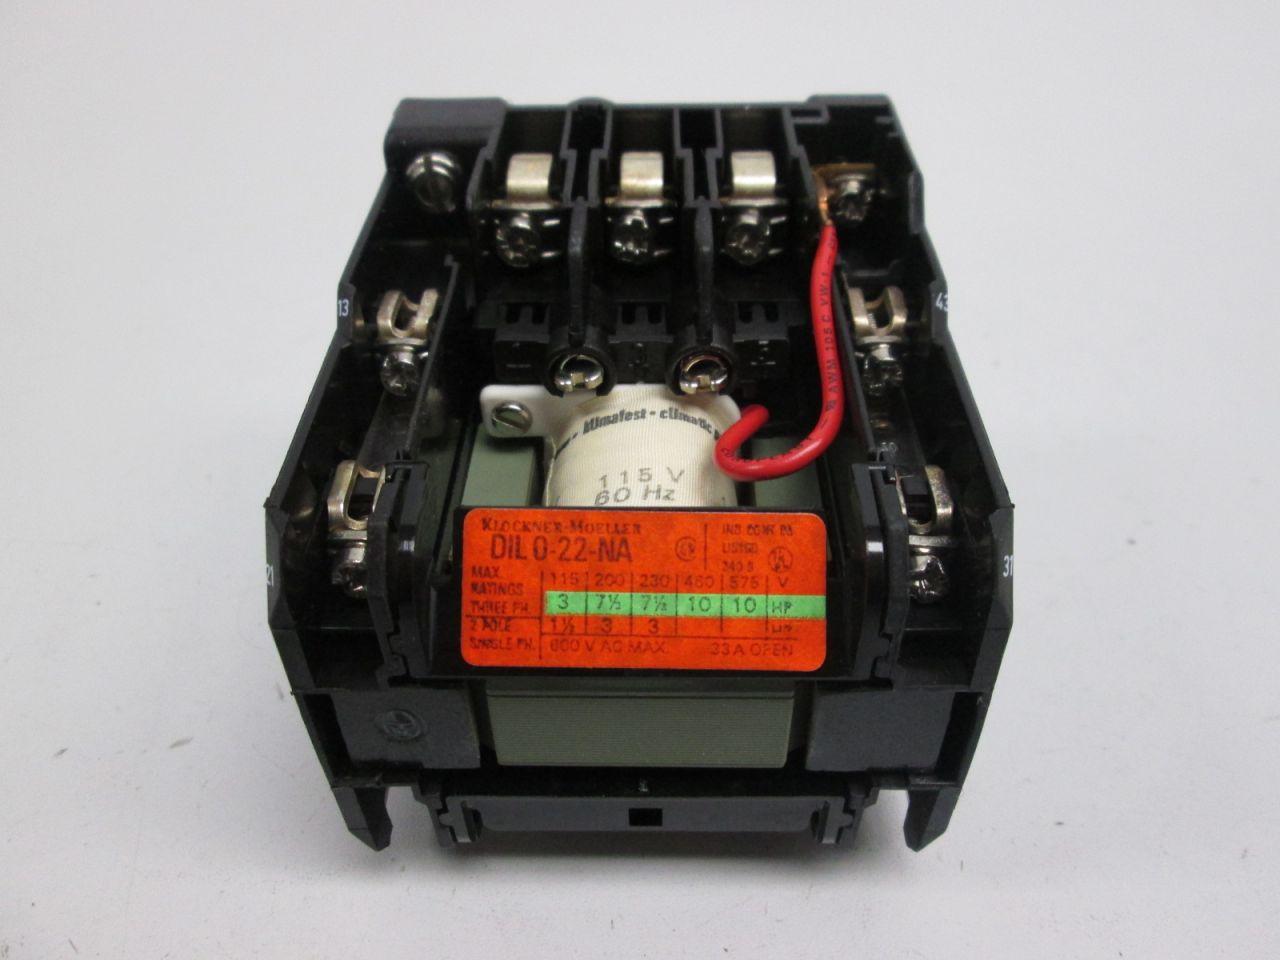 Klockner Moeller DIL0-22-NA Motor Contactor 33A Open 600VAC Used Lot of 2 